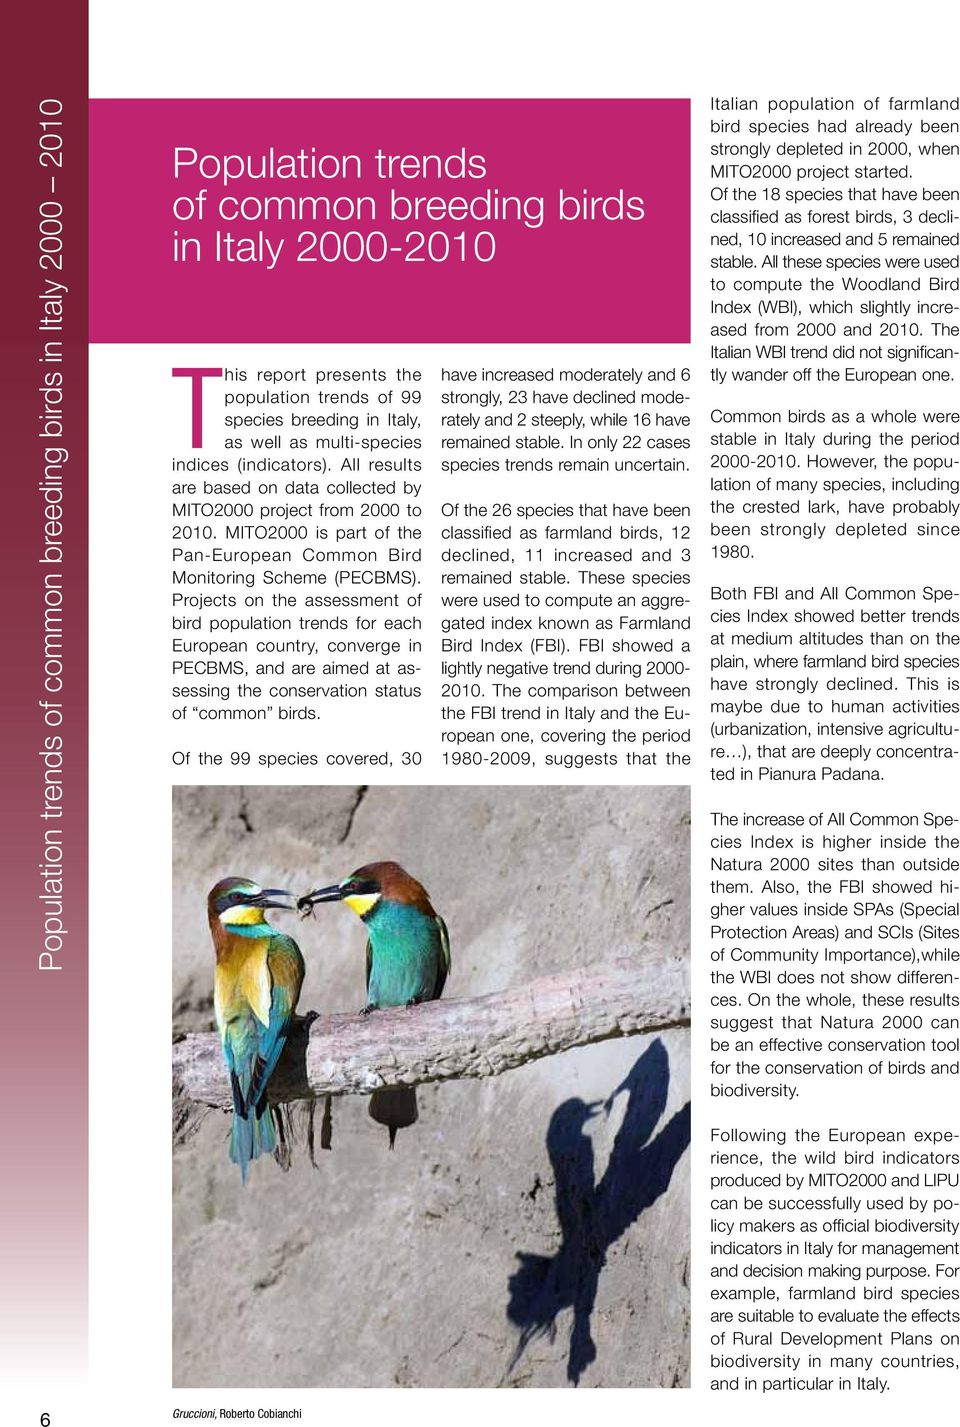 MITO2000 is part of the PanEuropean Common Bird Monitoring Scheme (PECBMS).